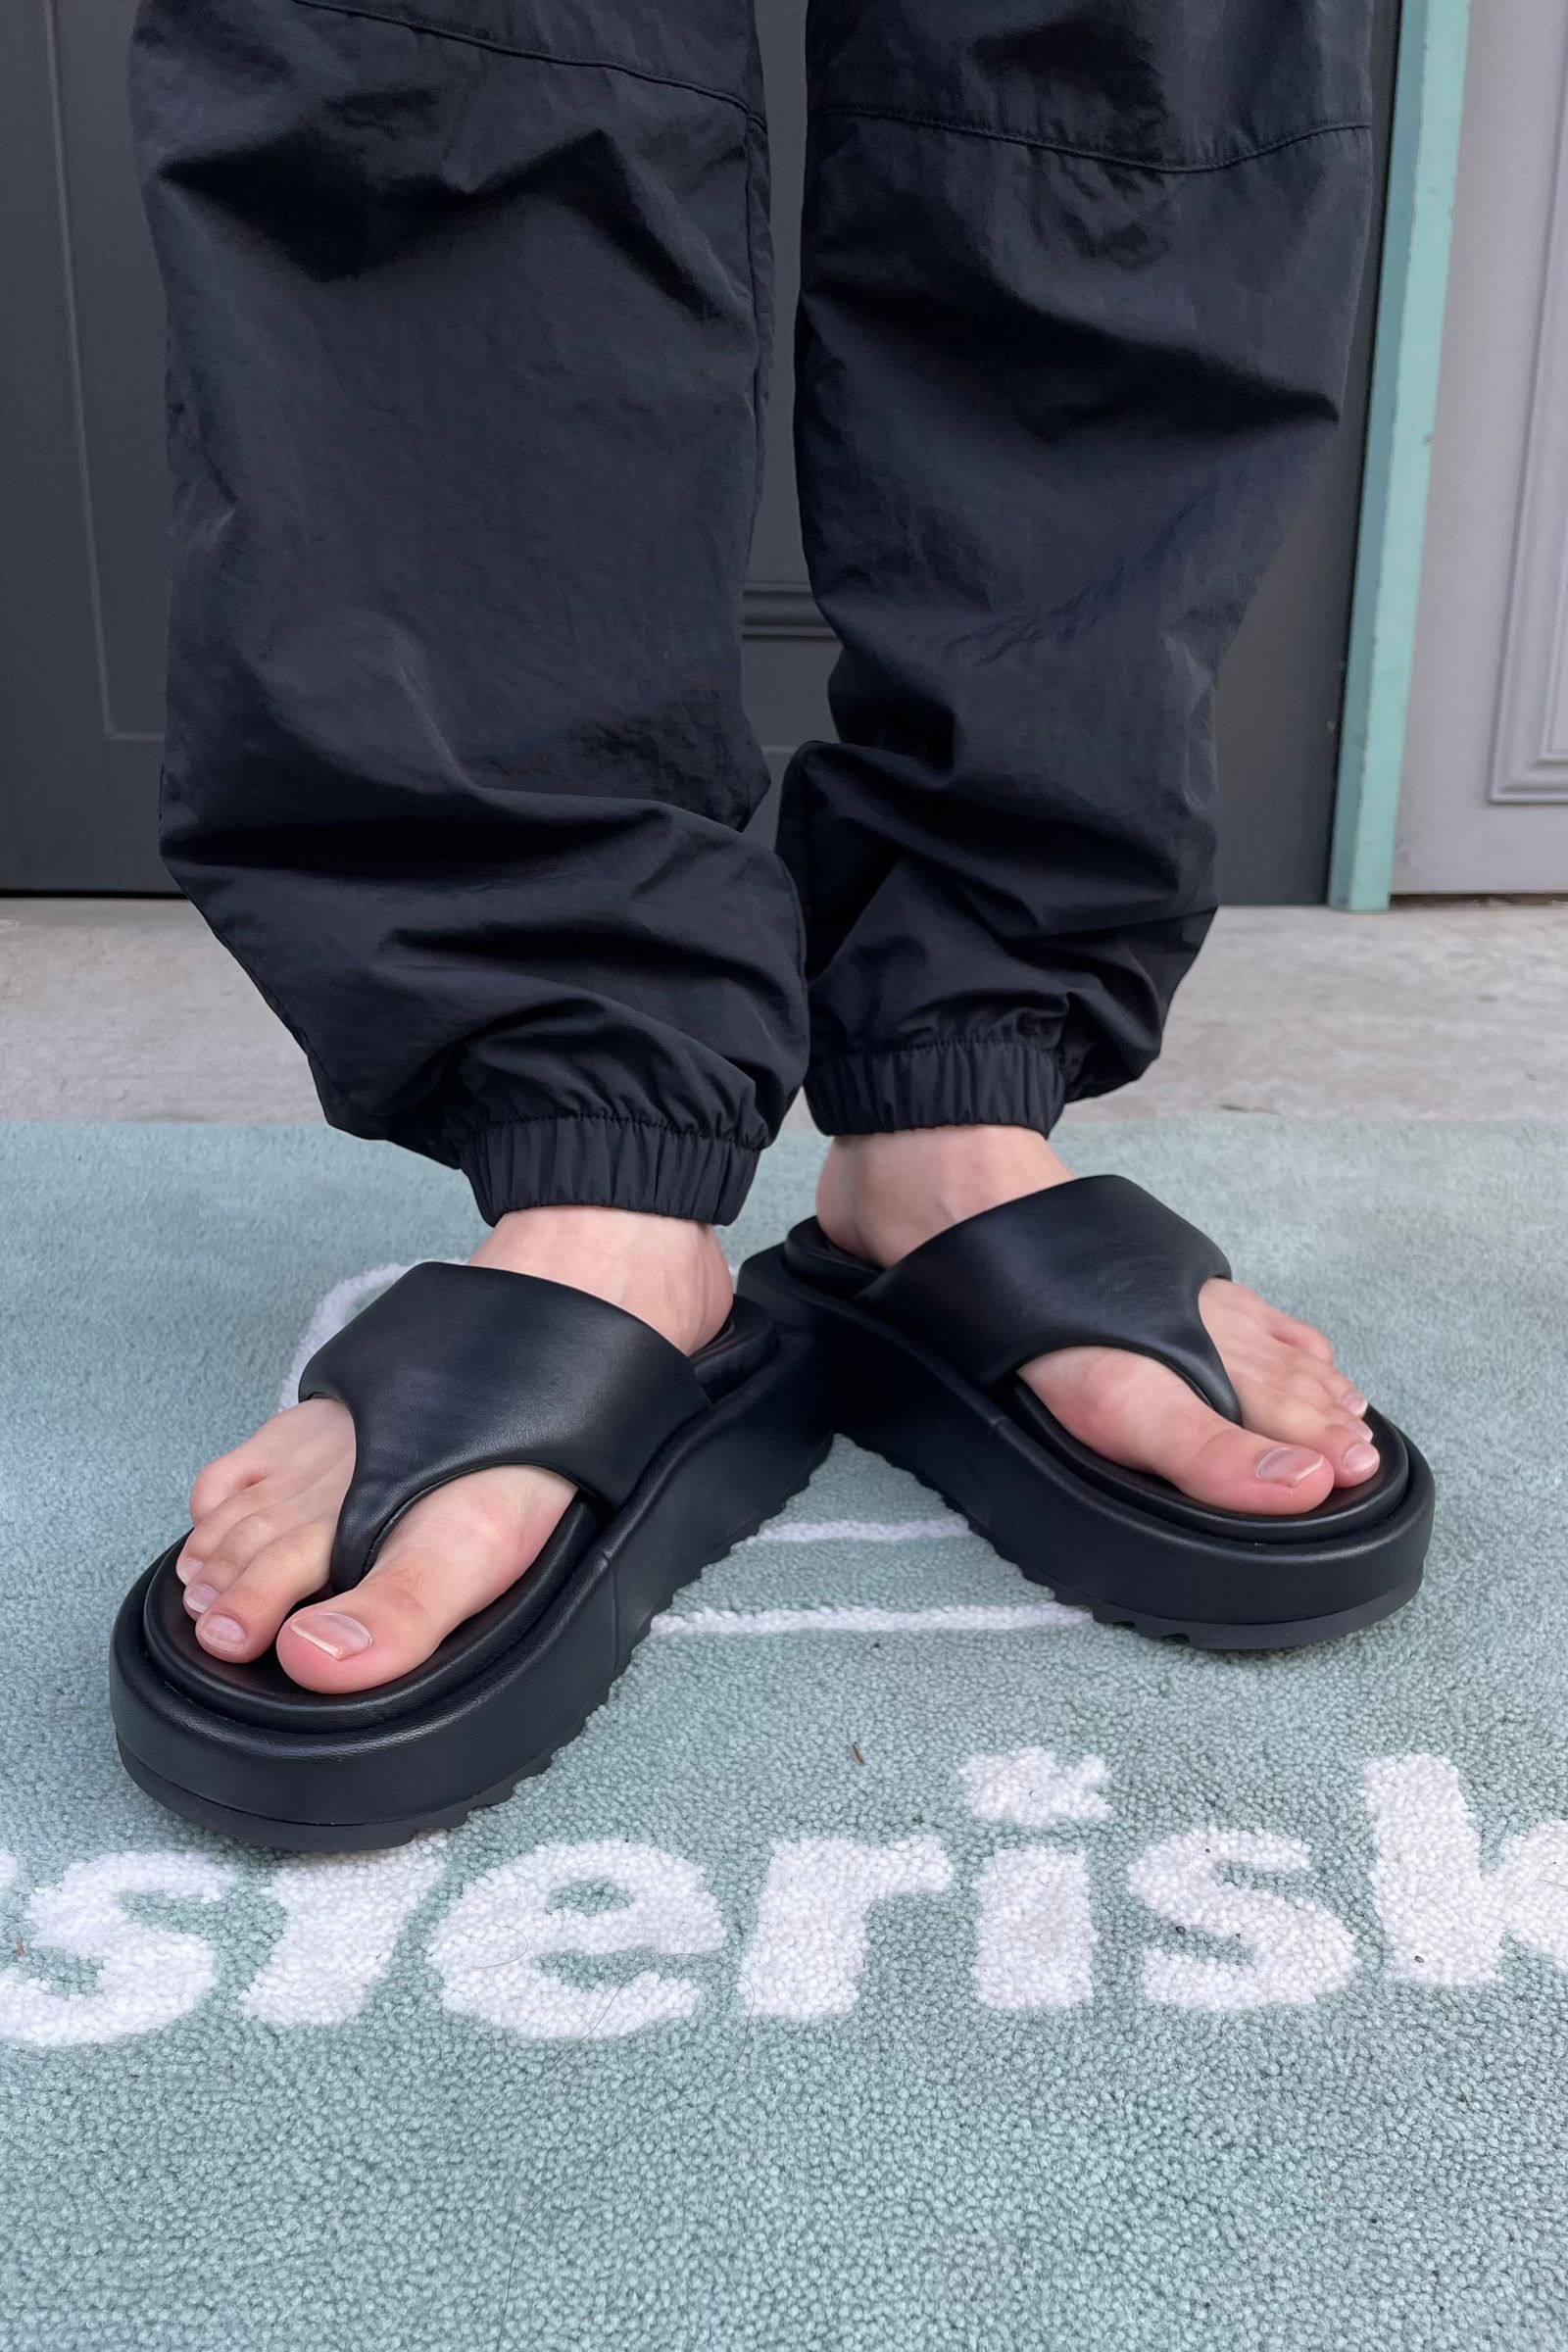 INSCRIRE サンダル thong sandals black 23ss素材SOFIALEATHE - サンダル